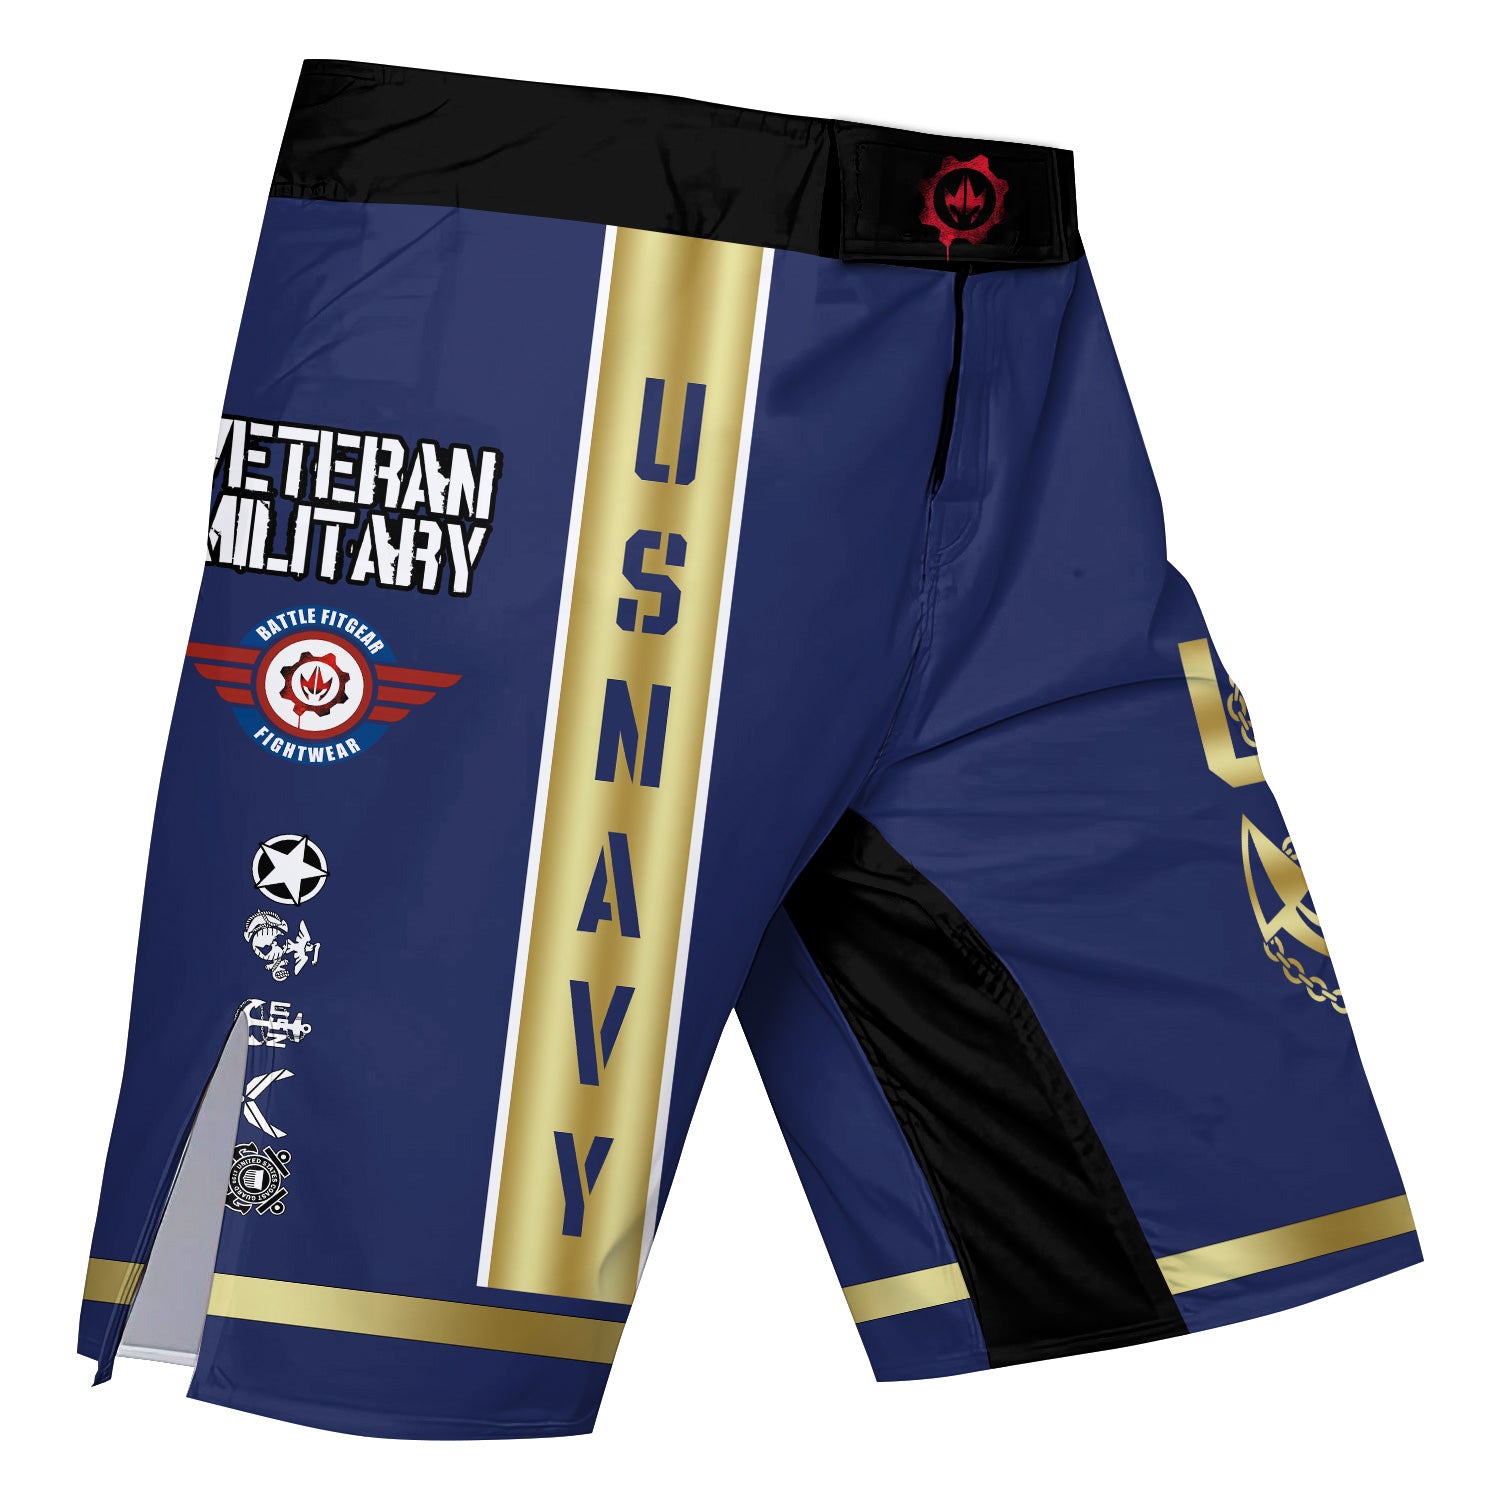 USA Navy Veteran Fight Shorts